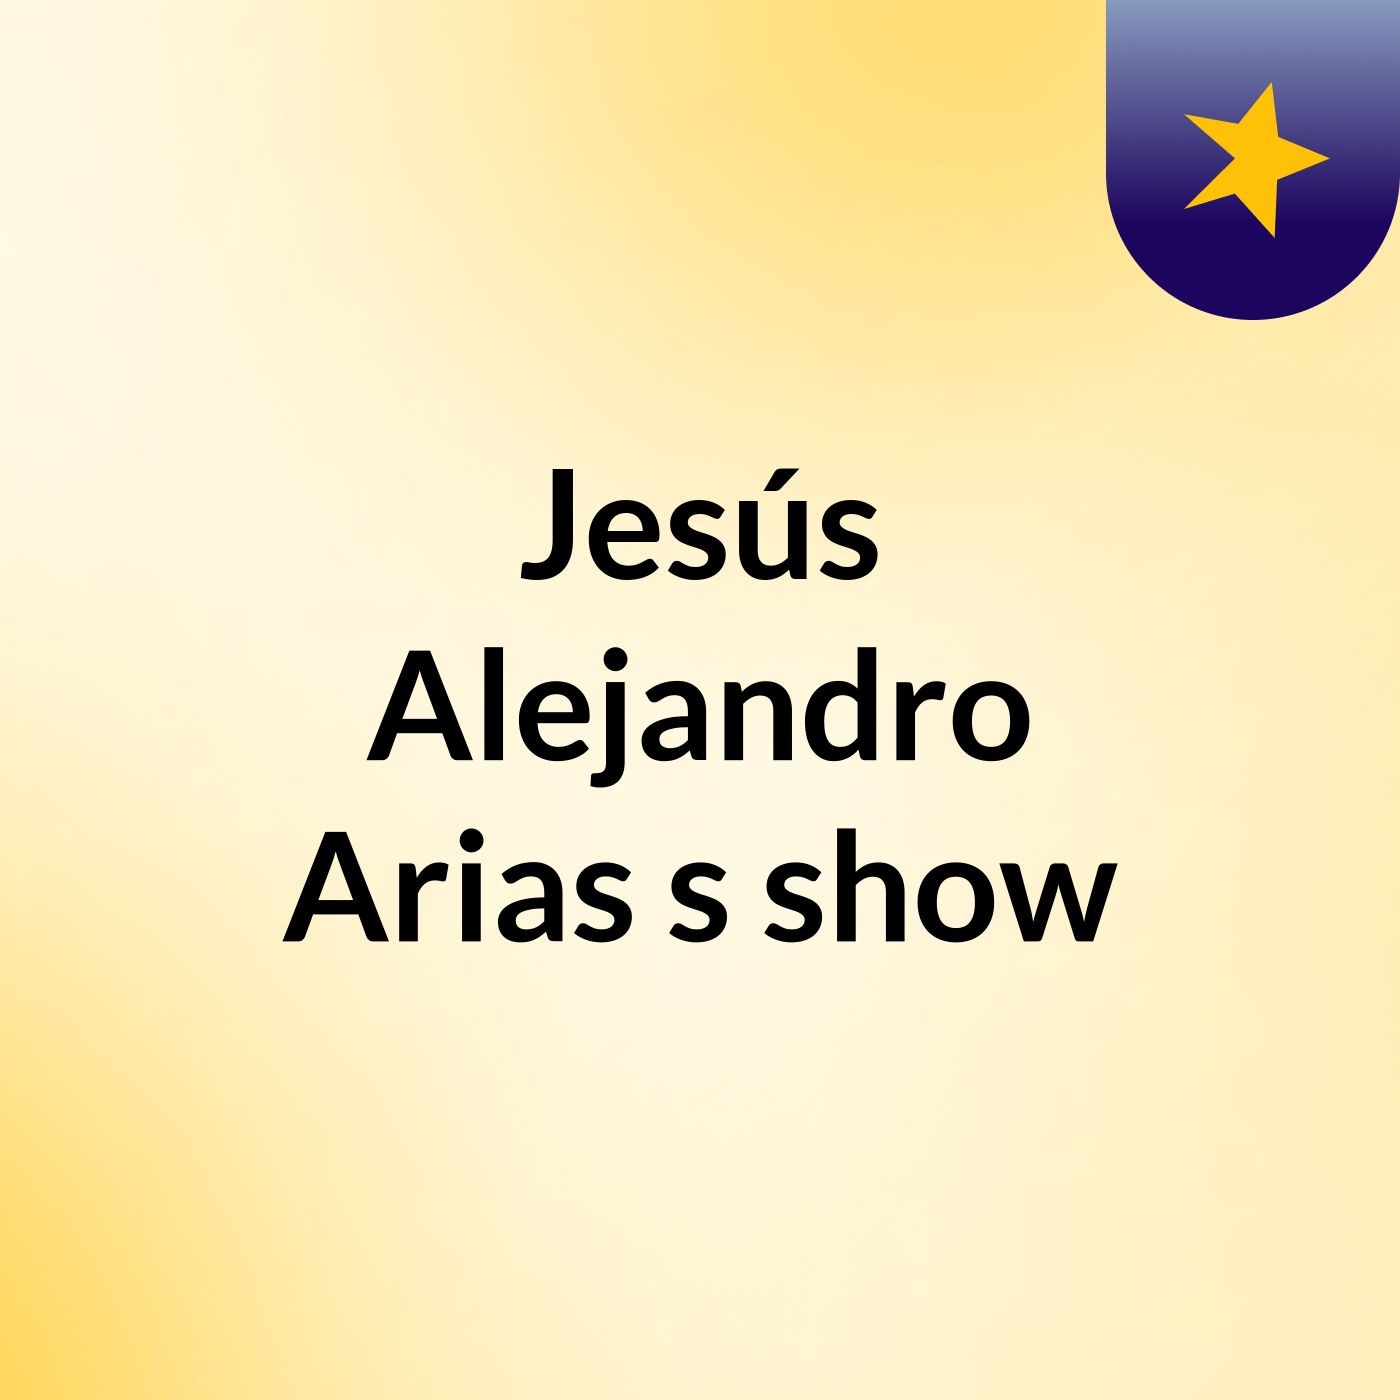 Jesús Alejandro Arias's show